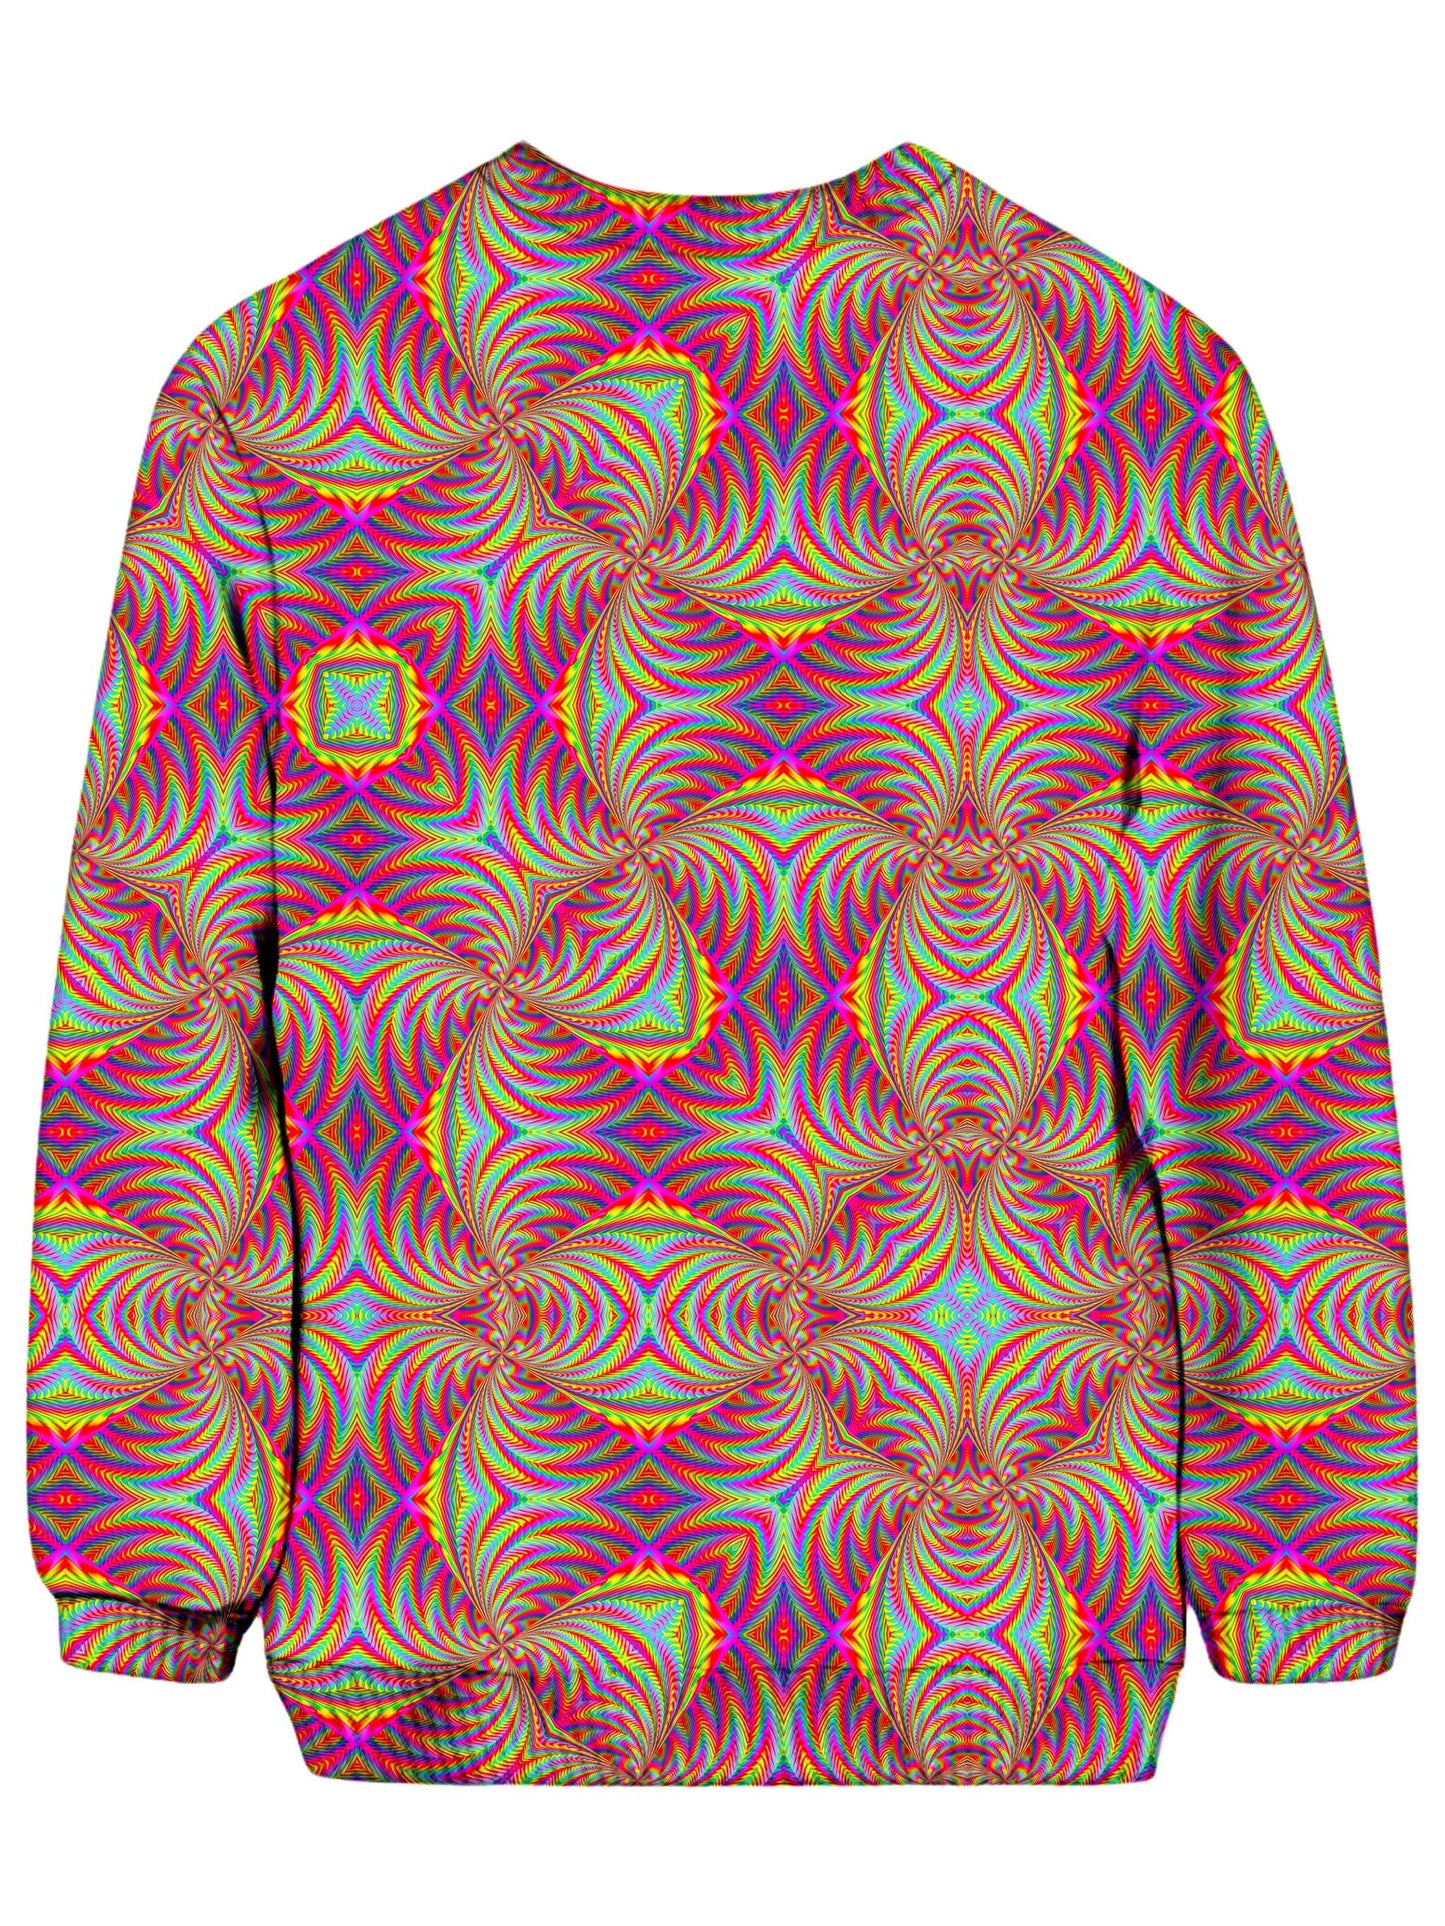 All The Faves Sweatshirt, Art Design Works, | iEDM